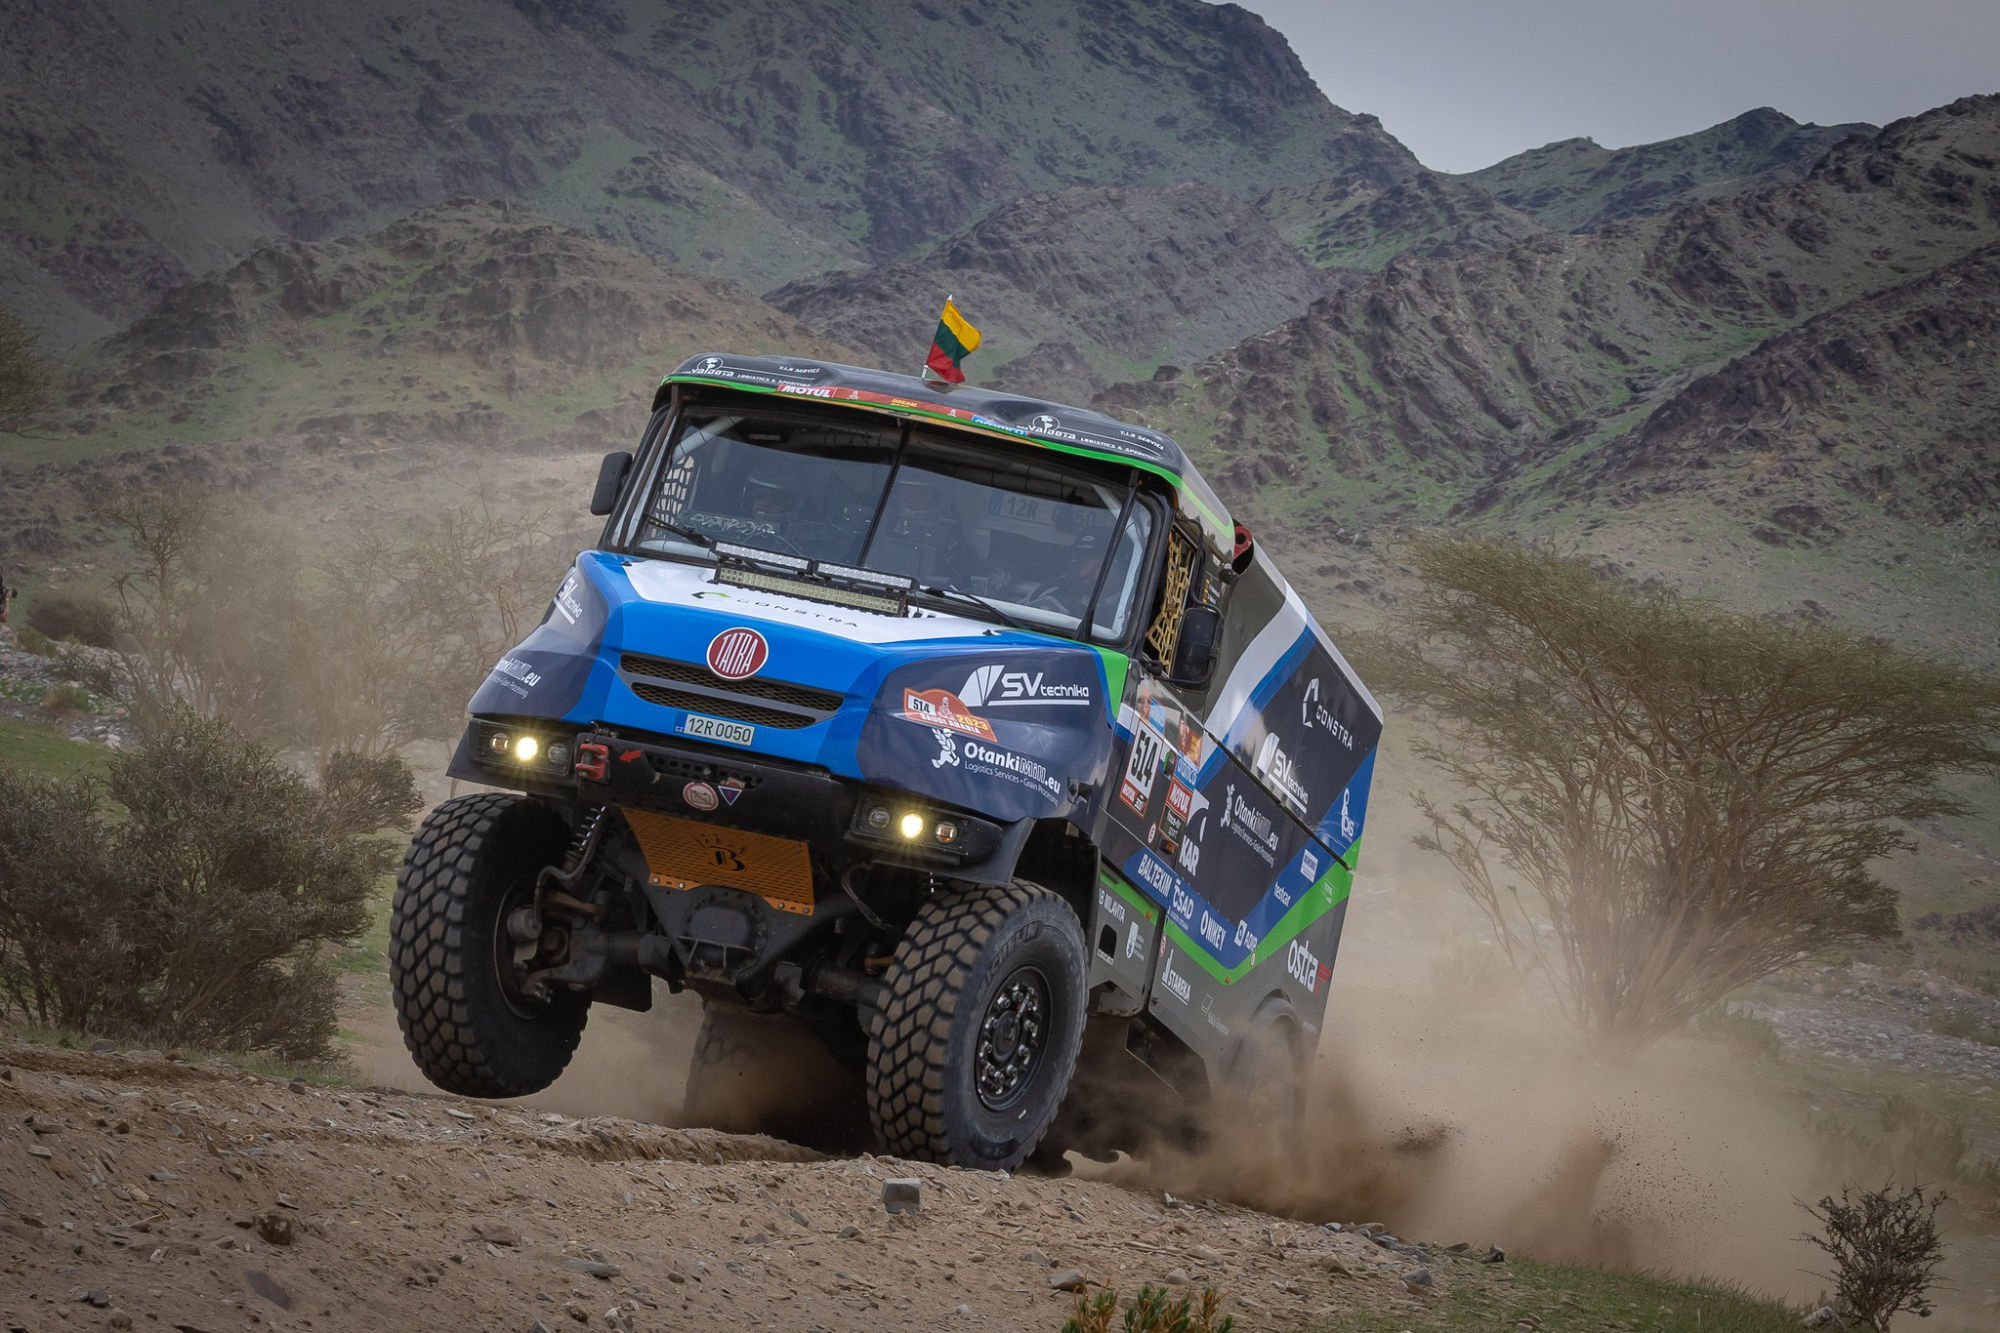 Dakar 2023 - Fesh Fesh team in livery design by WERKEMOTION